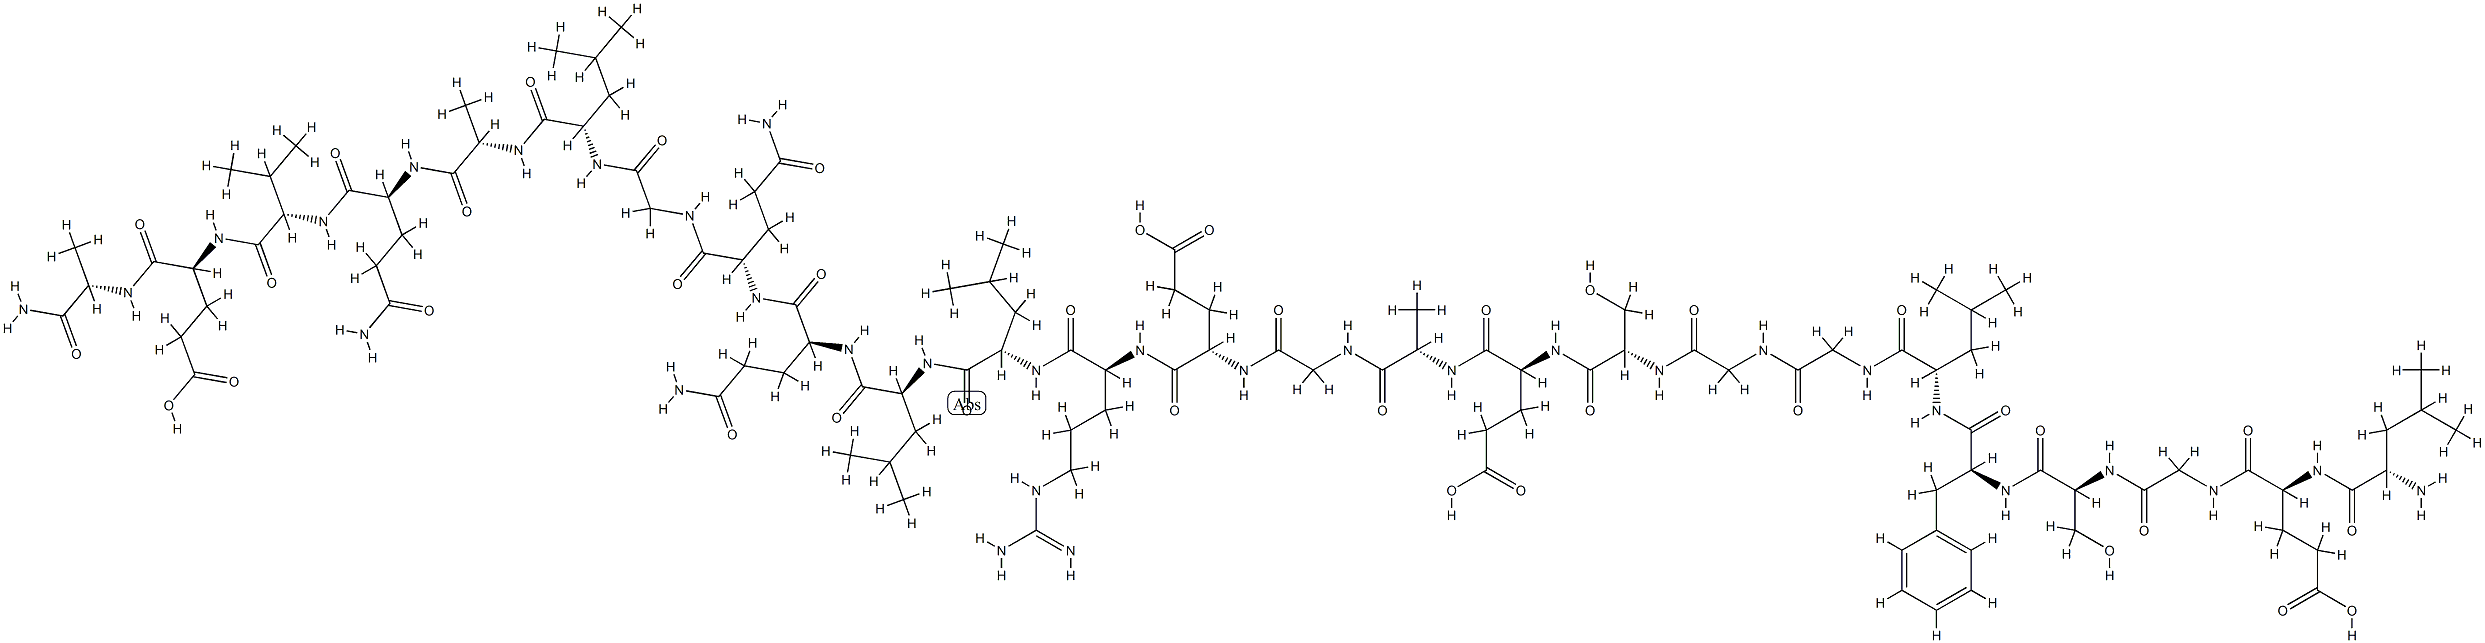 NERP-1 (RAT) Structure